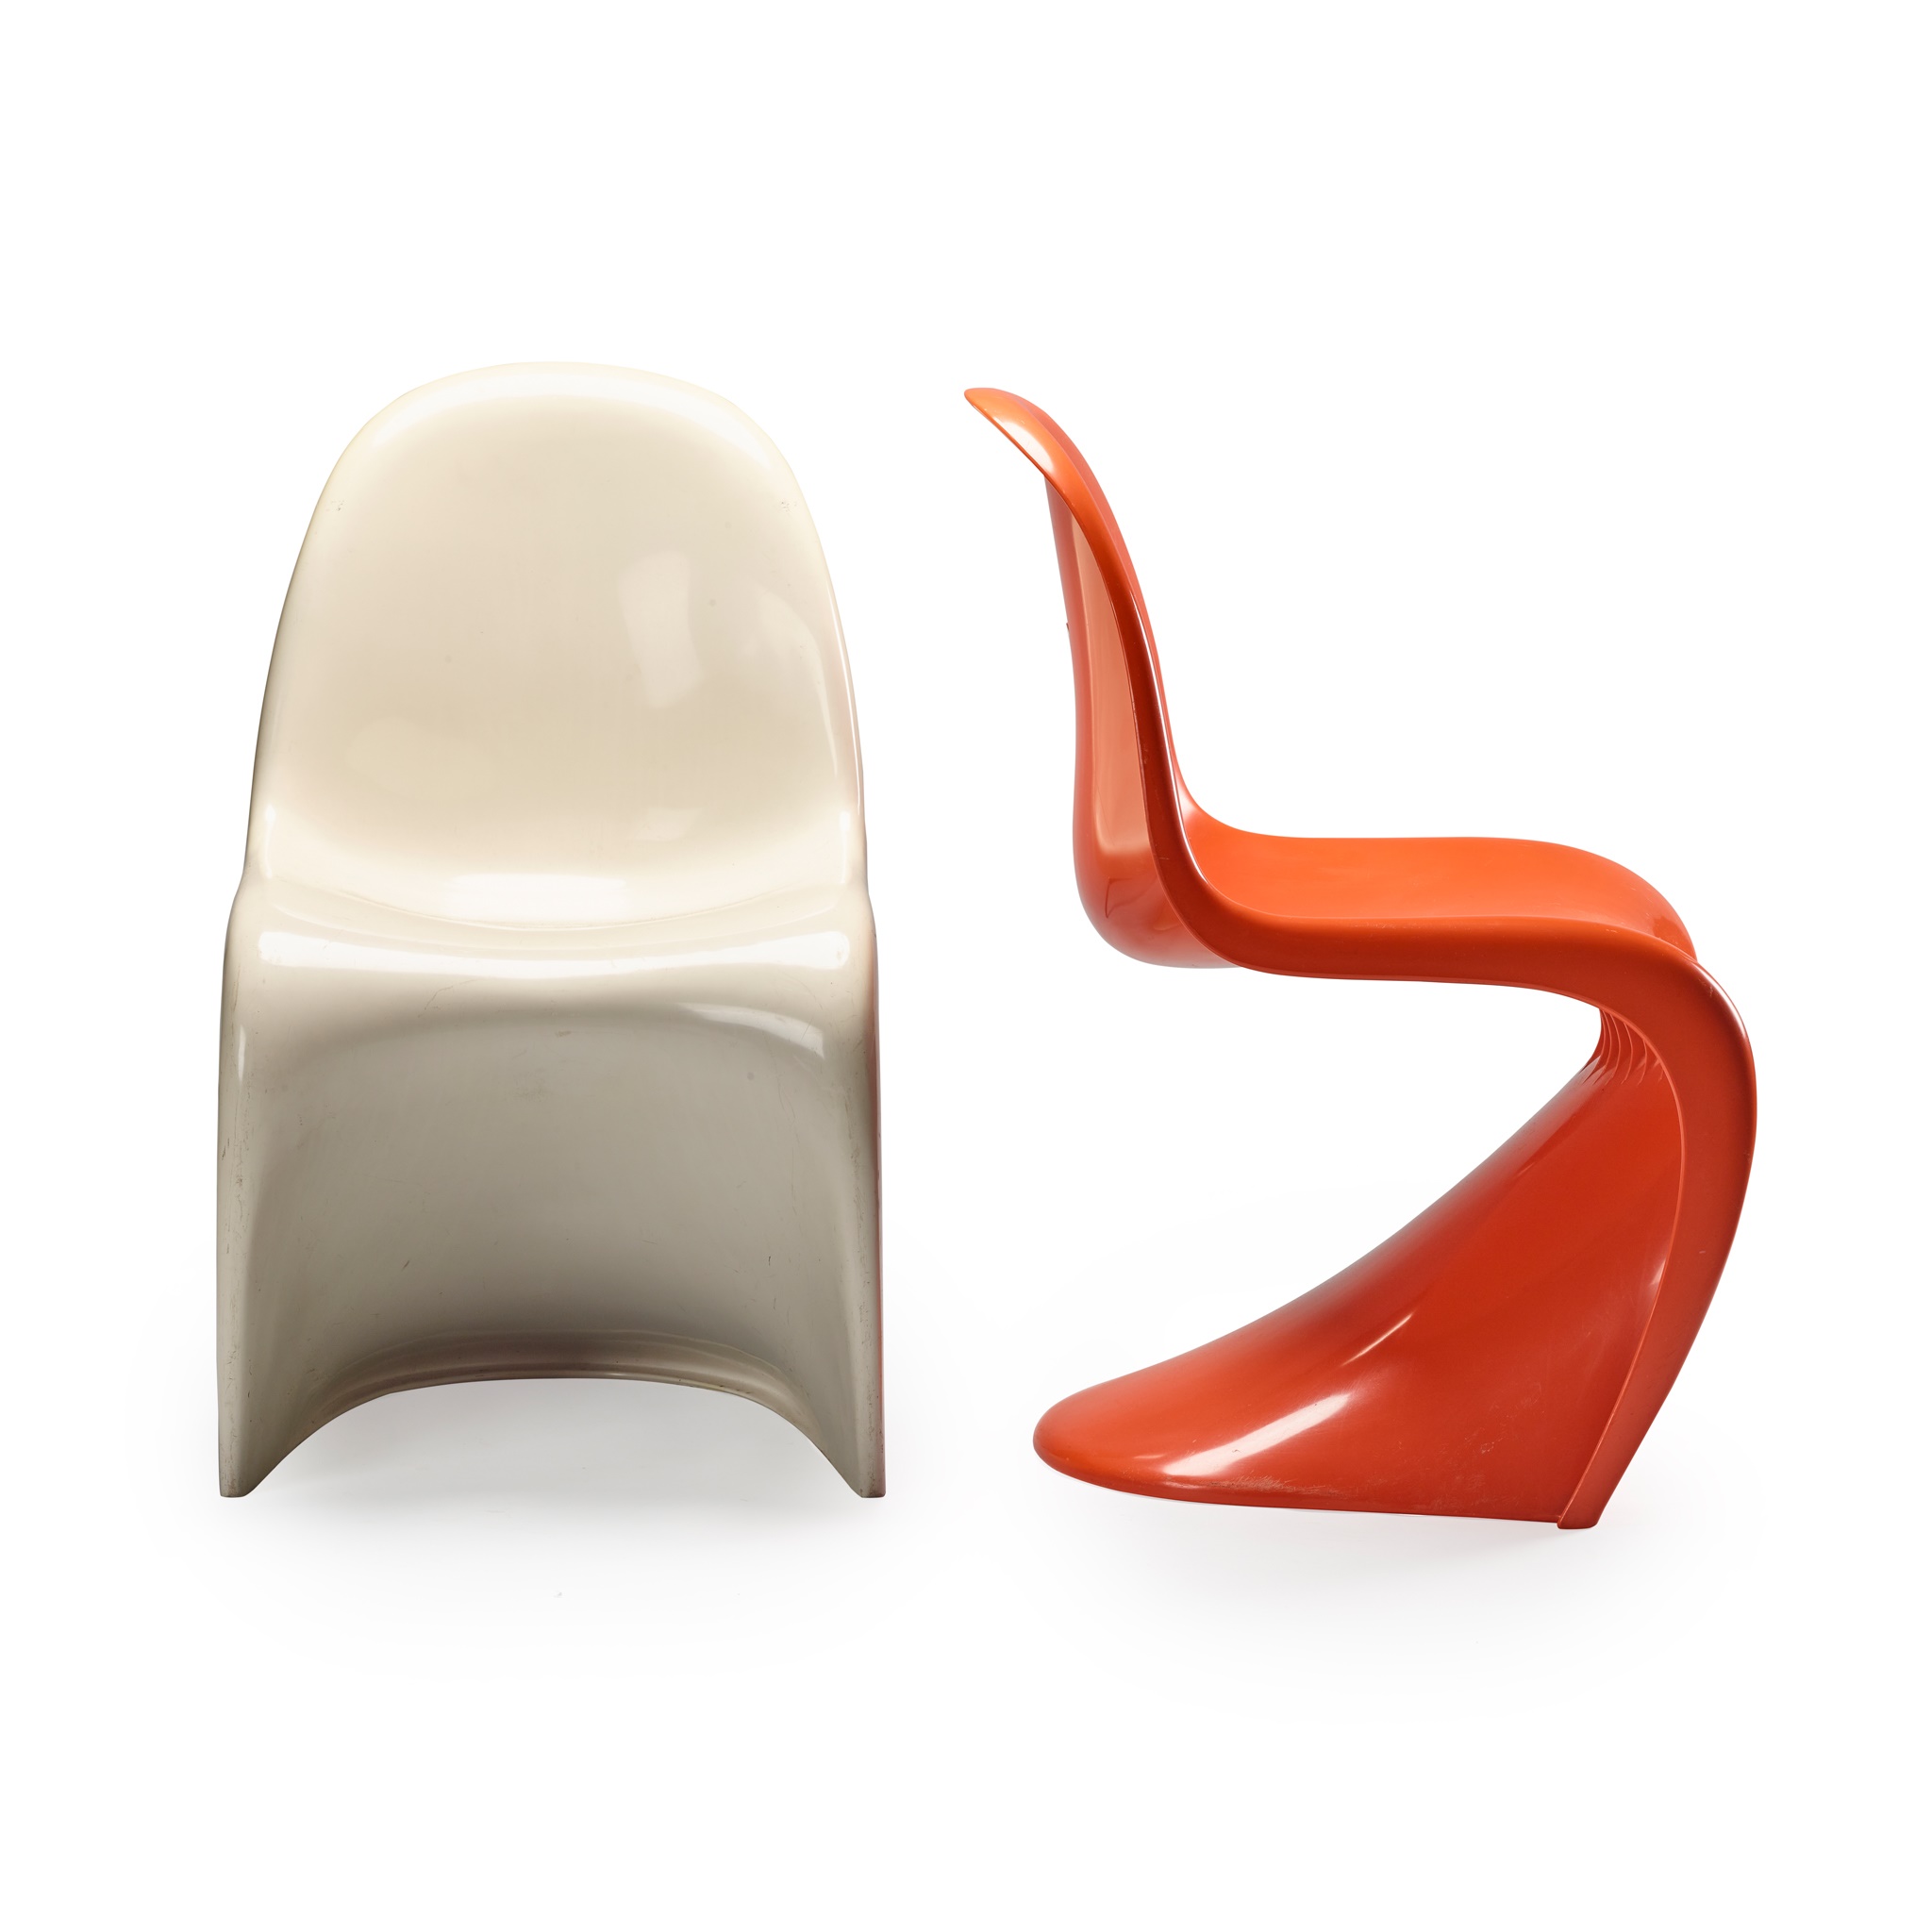 Verner Panton (Danish 1926-1998) Two 'Panton' Chairs, designed 1967 - Image 2 of 2